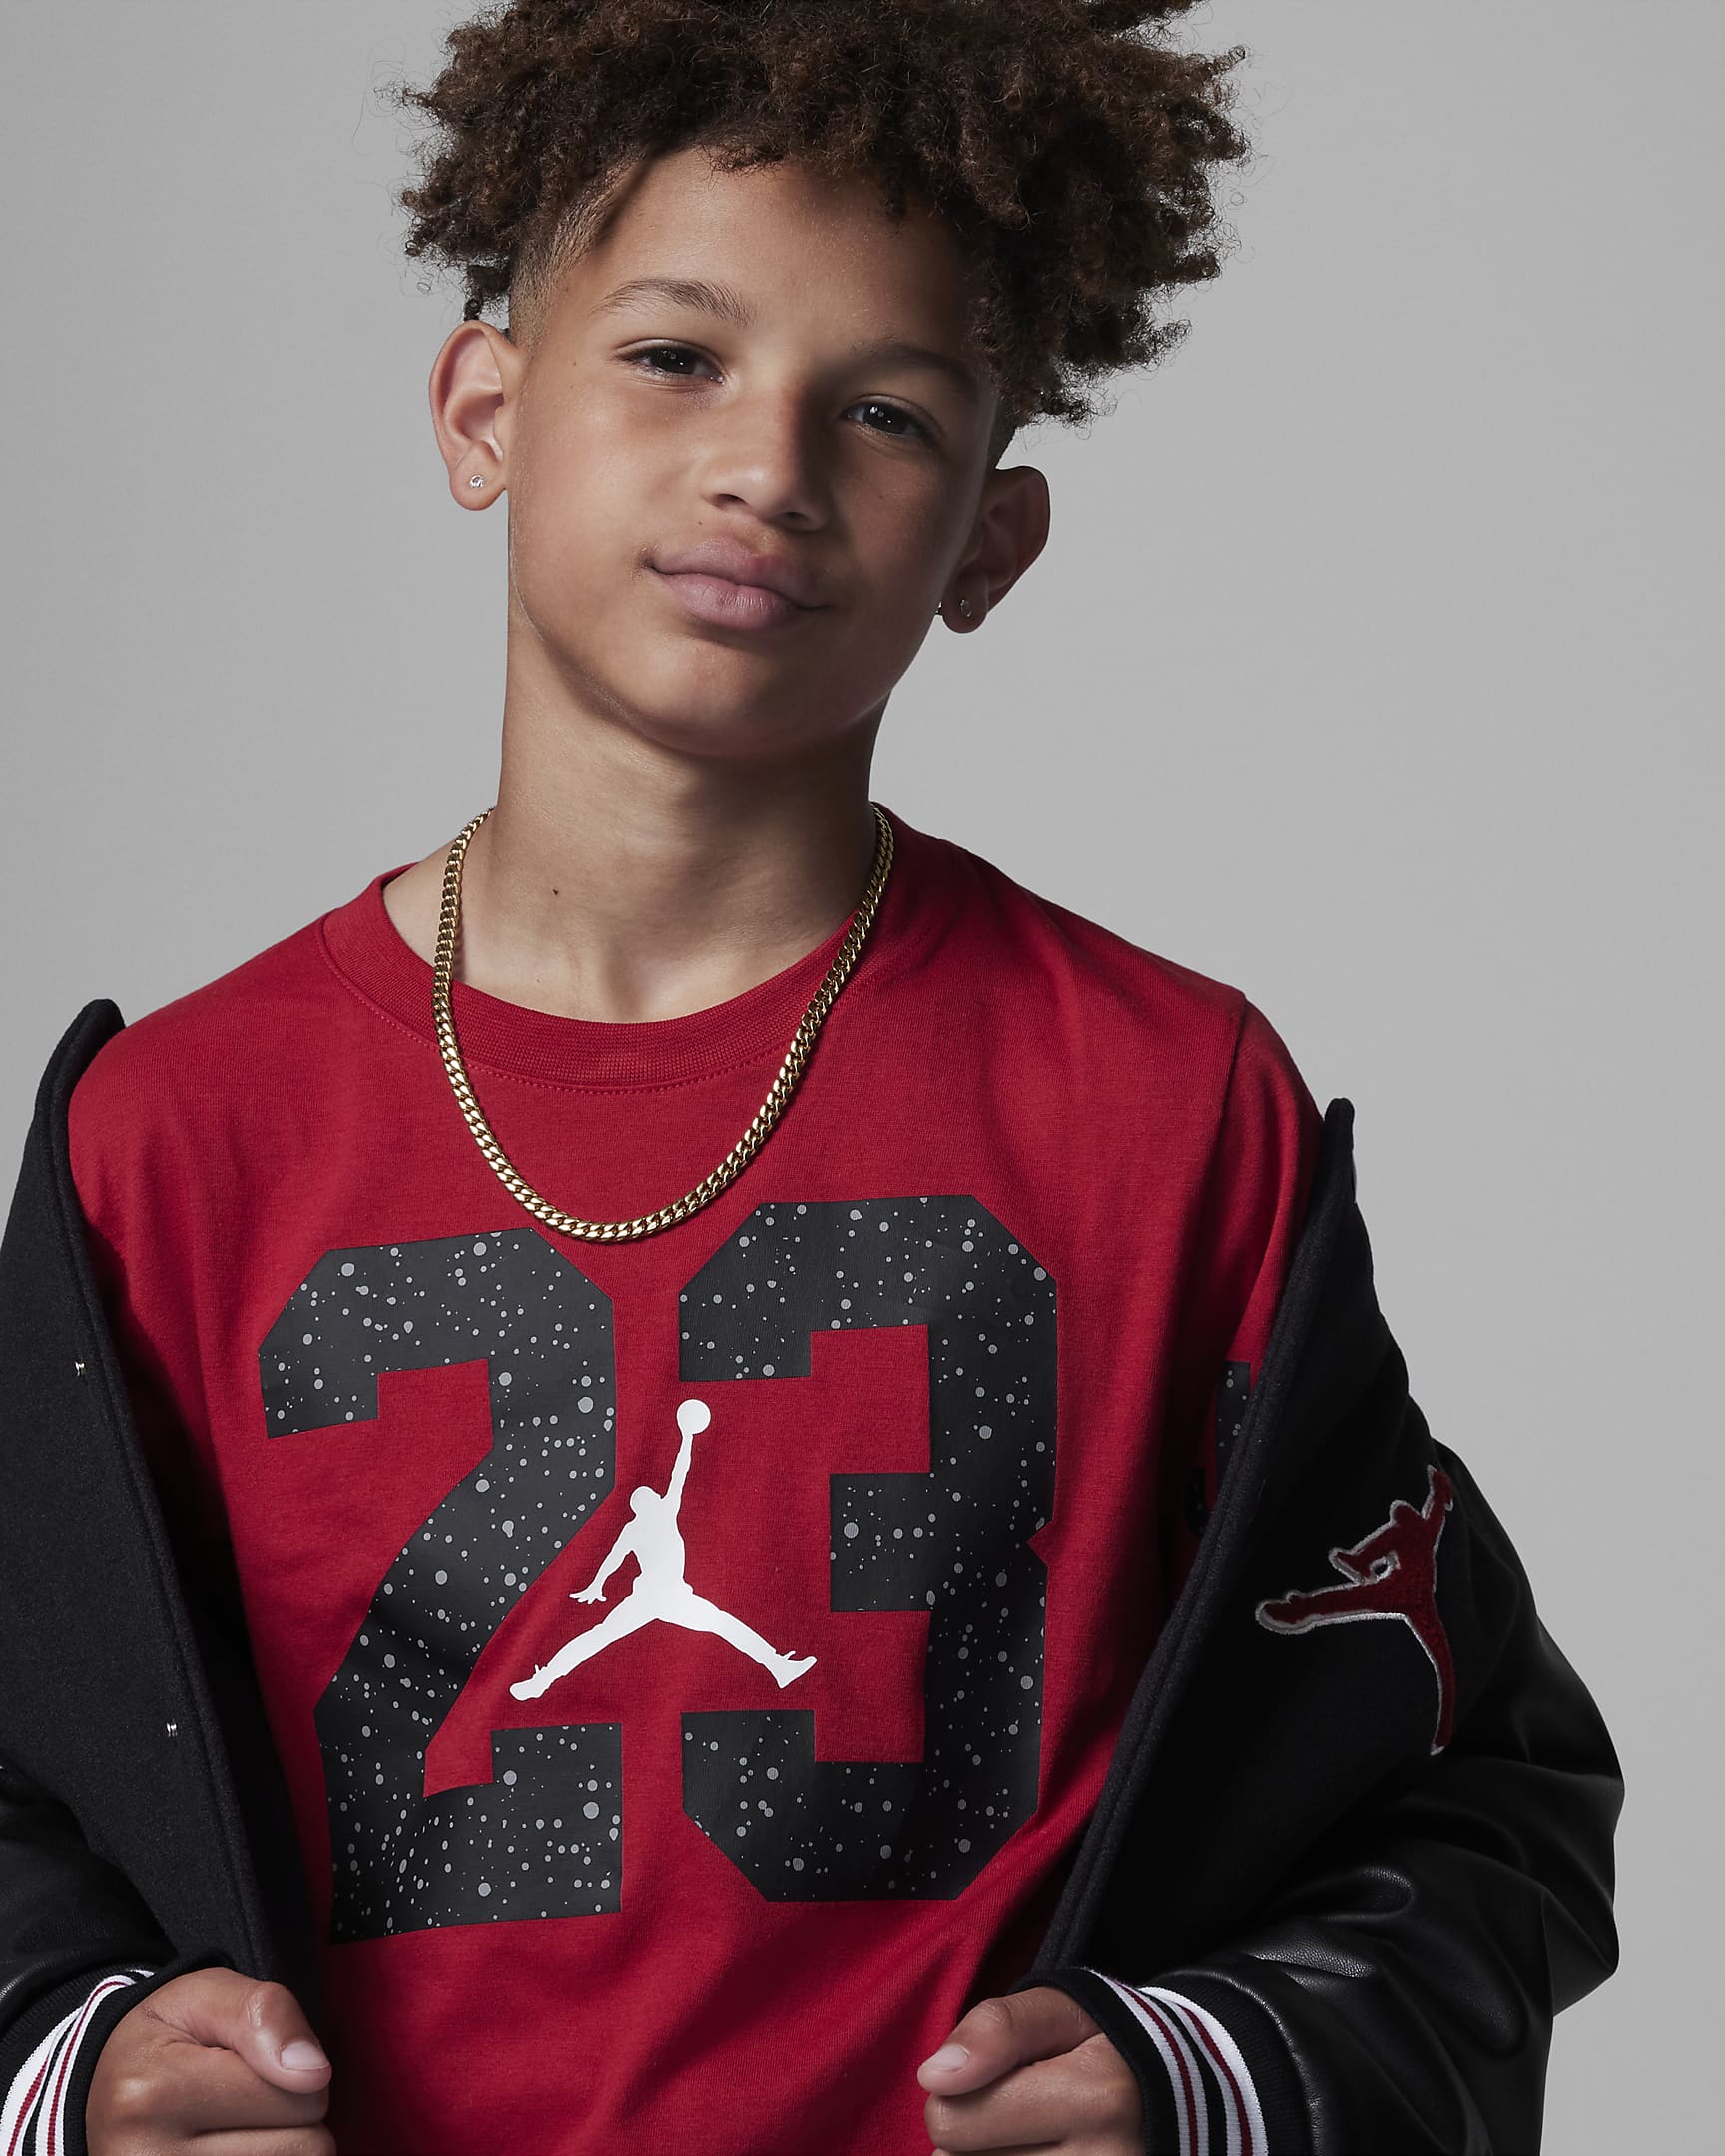 Jordan 23 Speckled Tee Older Kids' T-Shirt. Nike FI